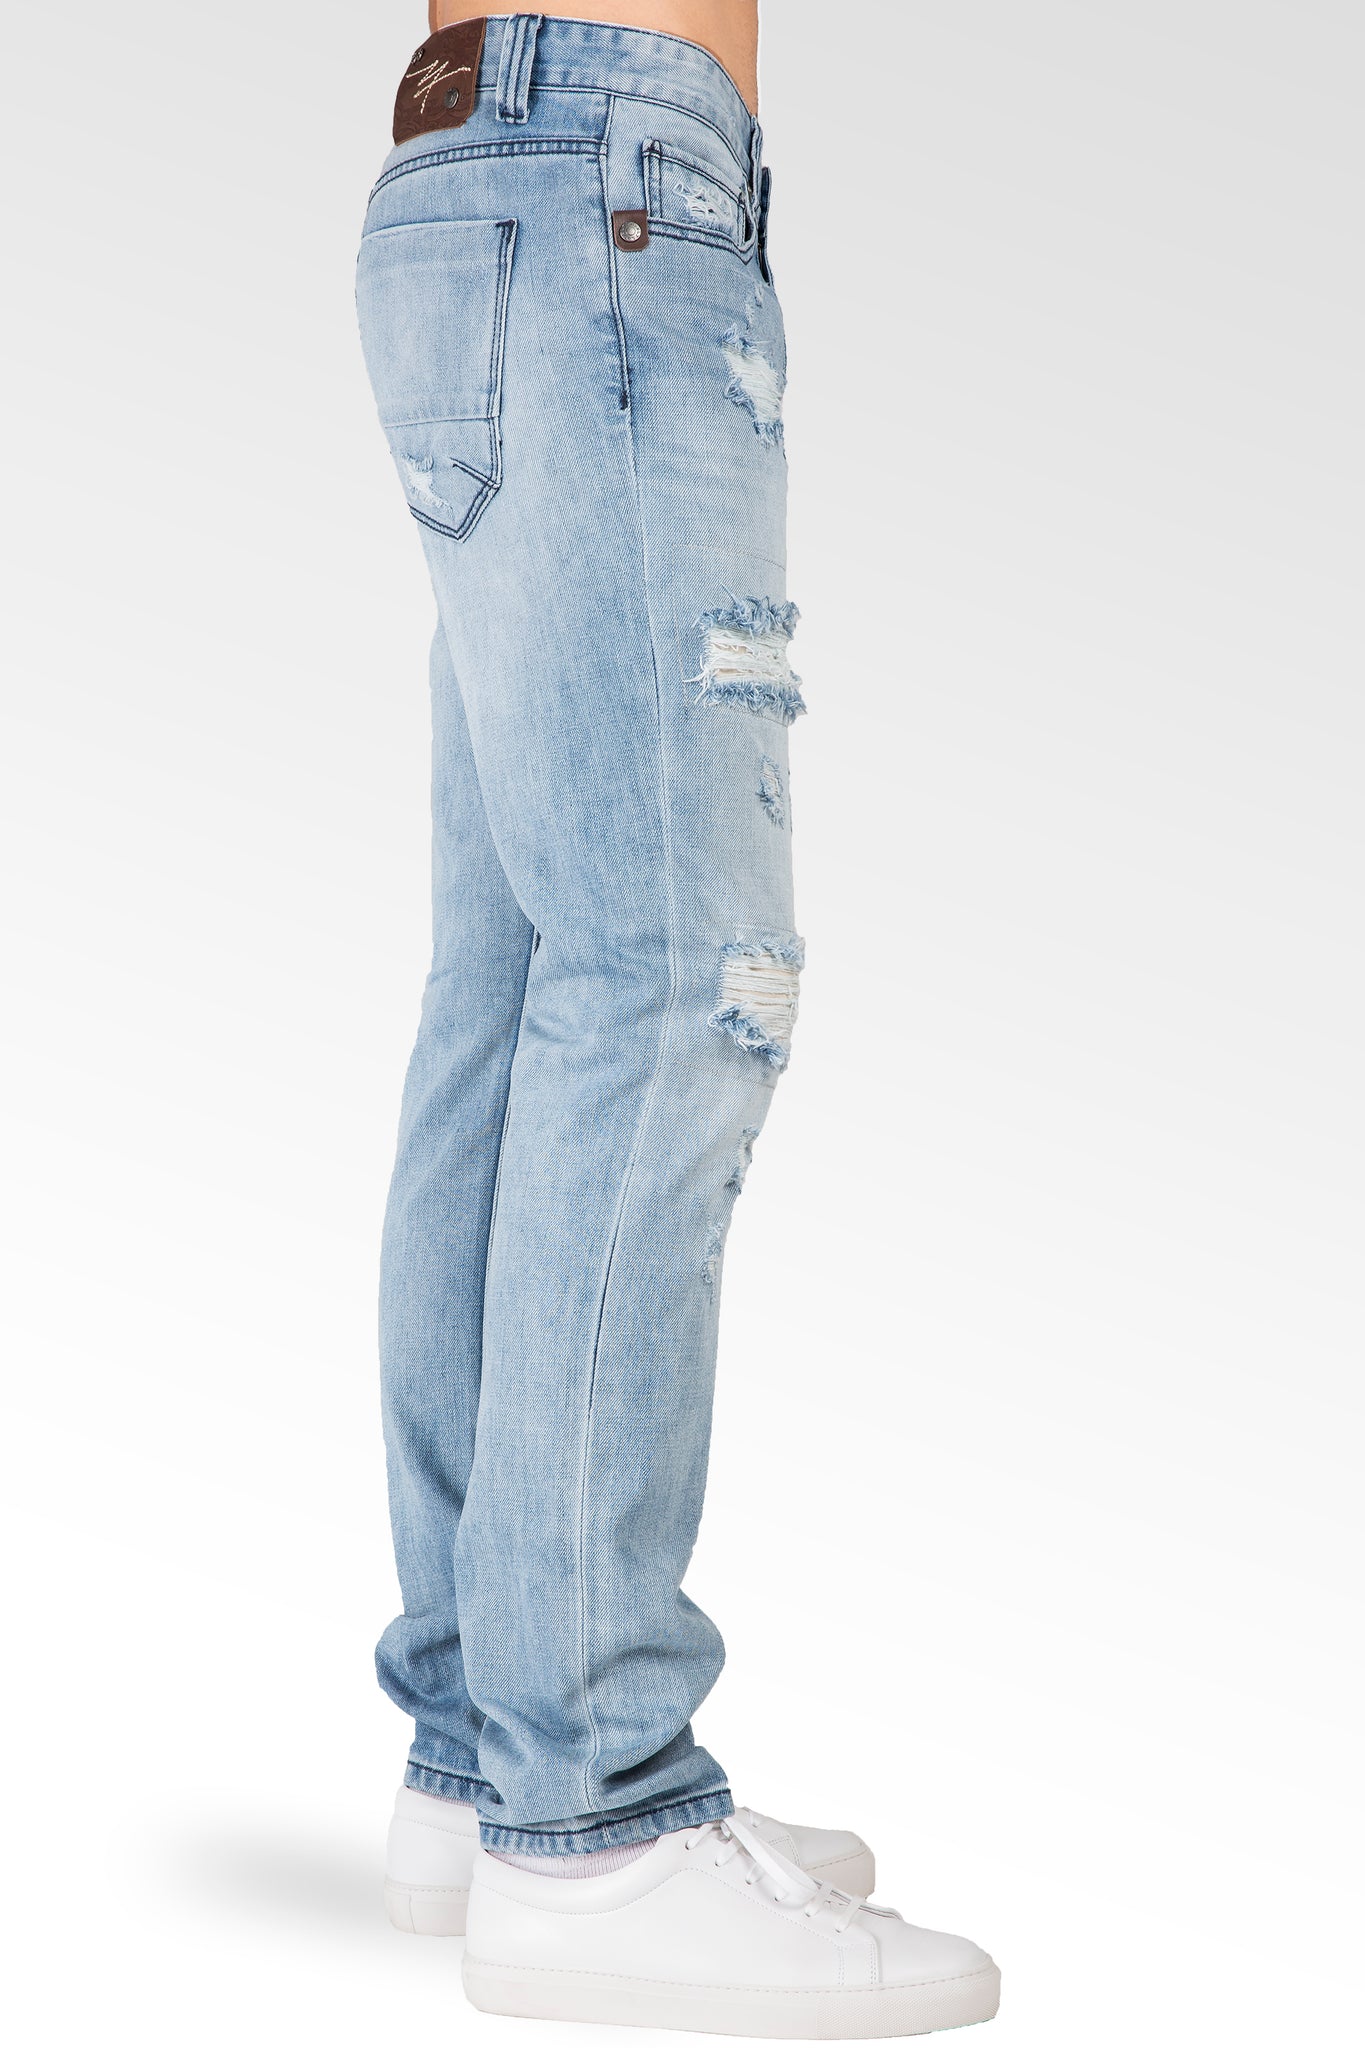 Distressed Powder Blue Slim Tapered Leg Premium Denim Jeans, signature 5 pocket with Ripped Repaired